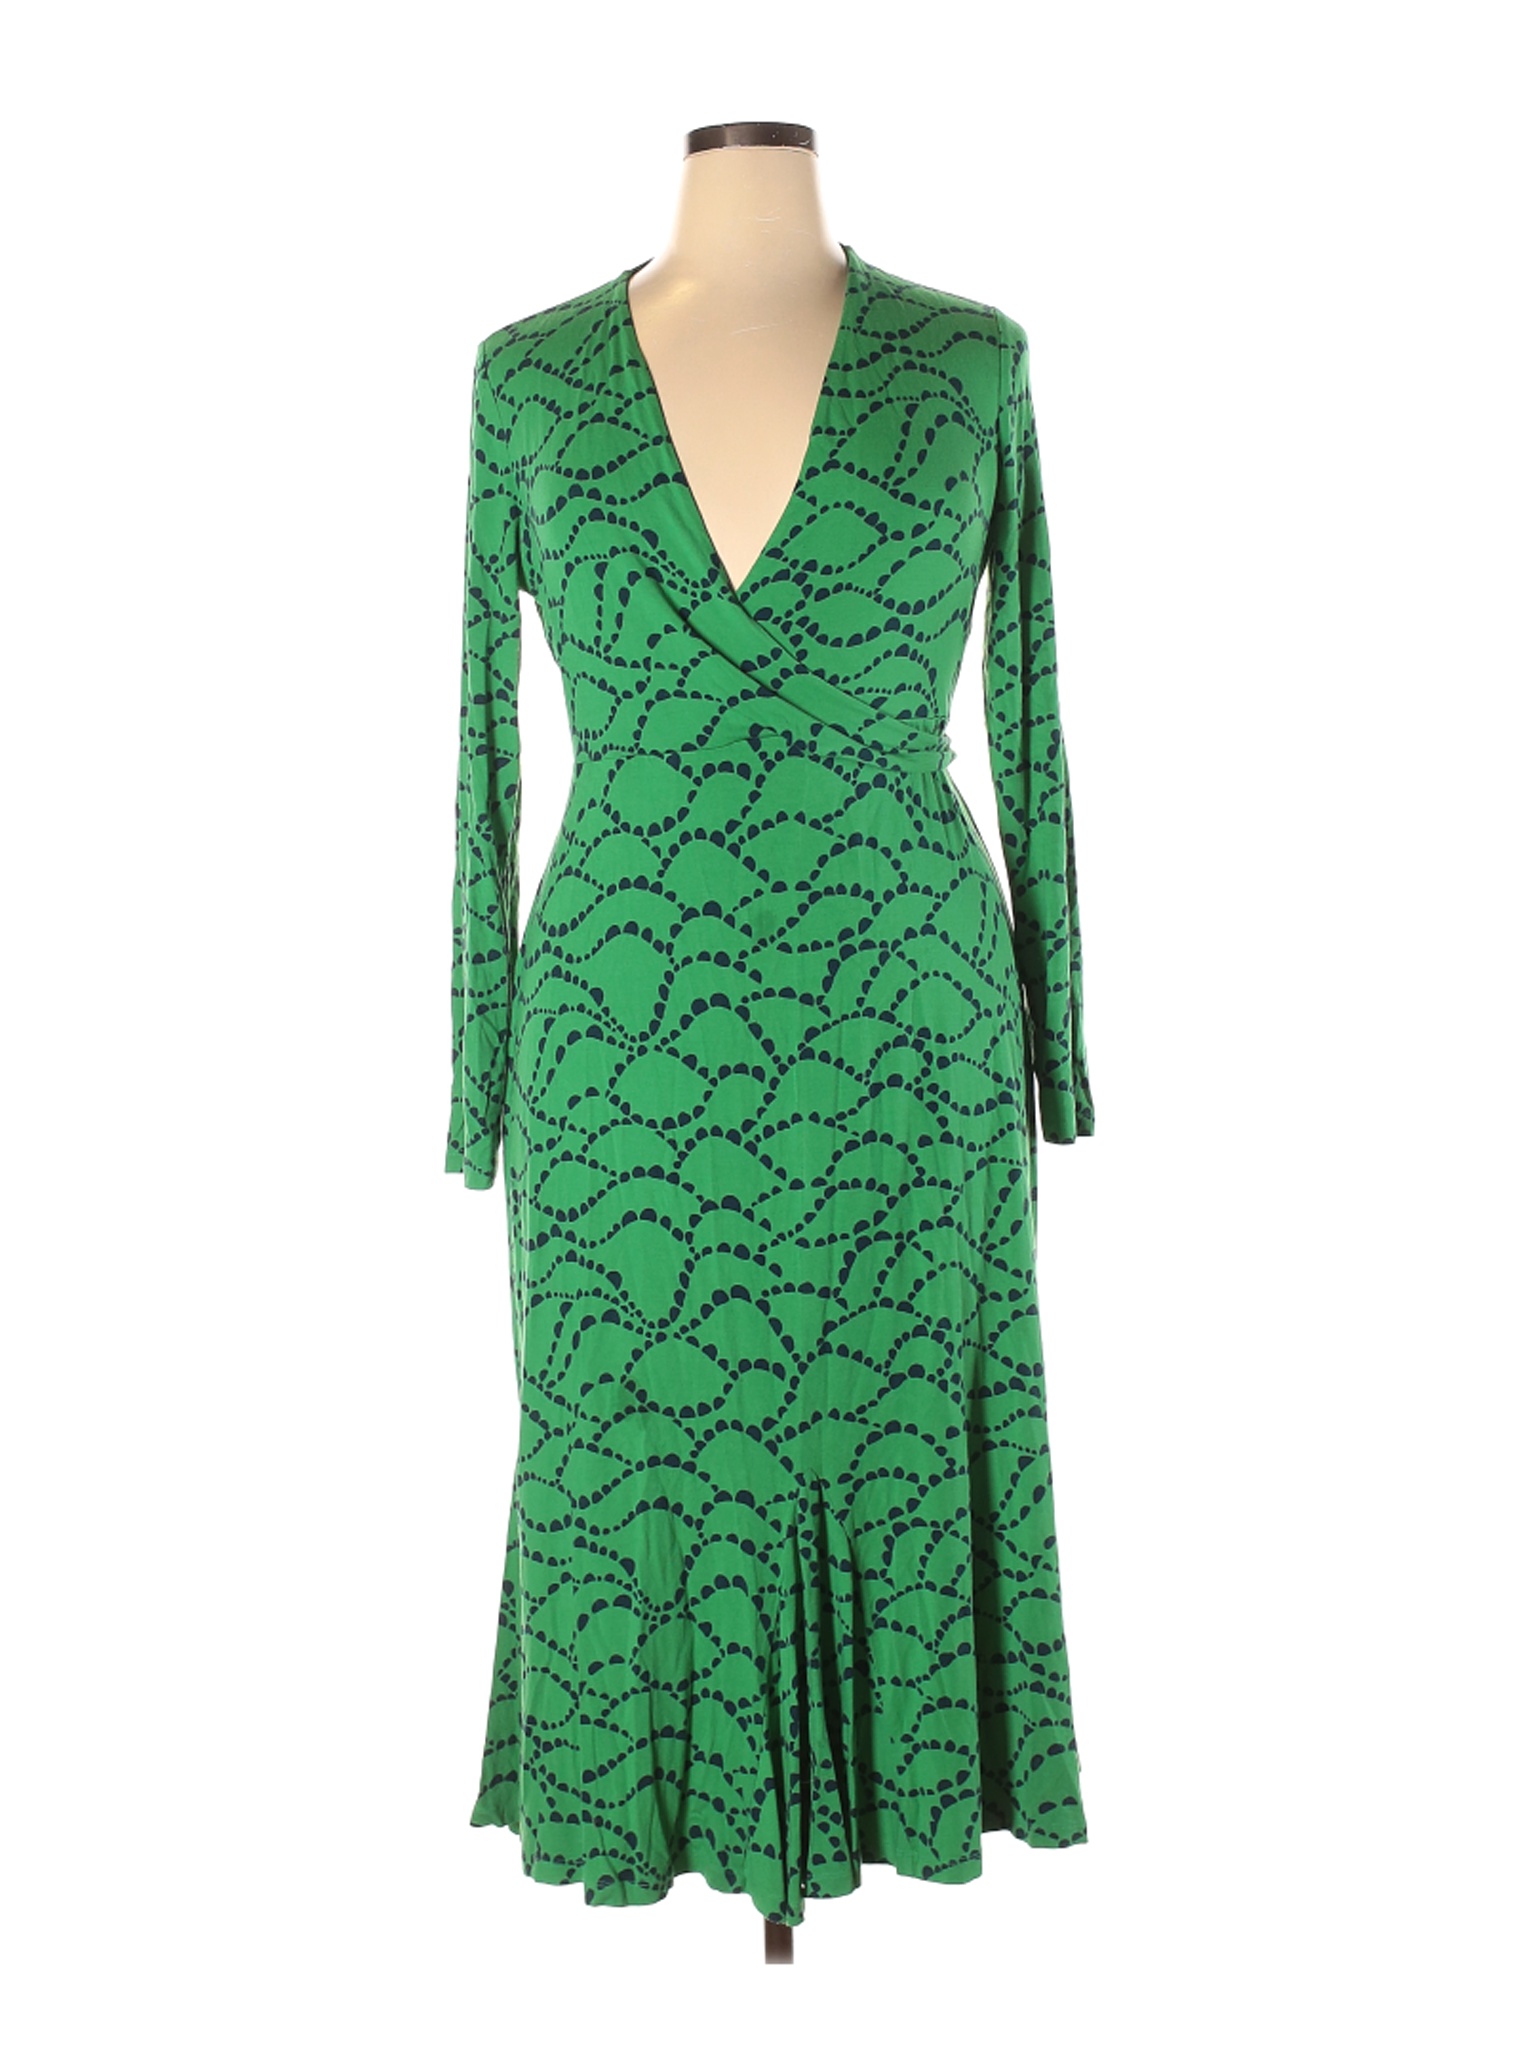 Boden Women Green Casual Dress 14 | eBay